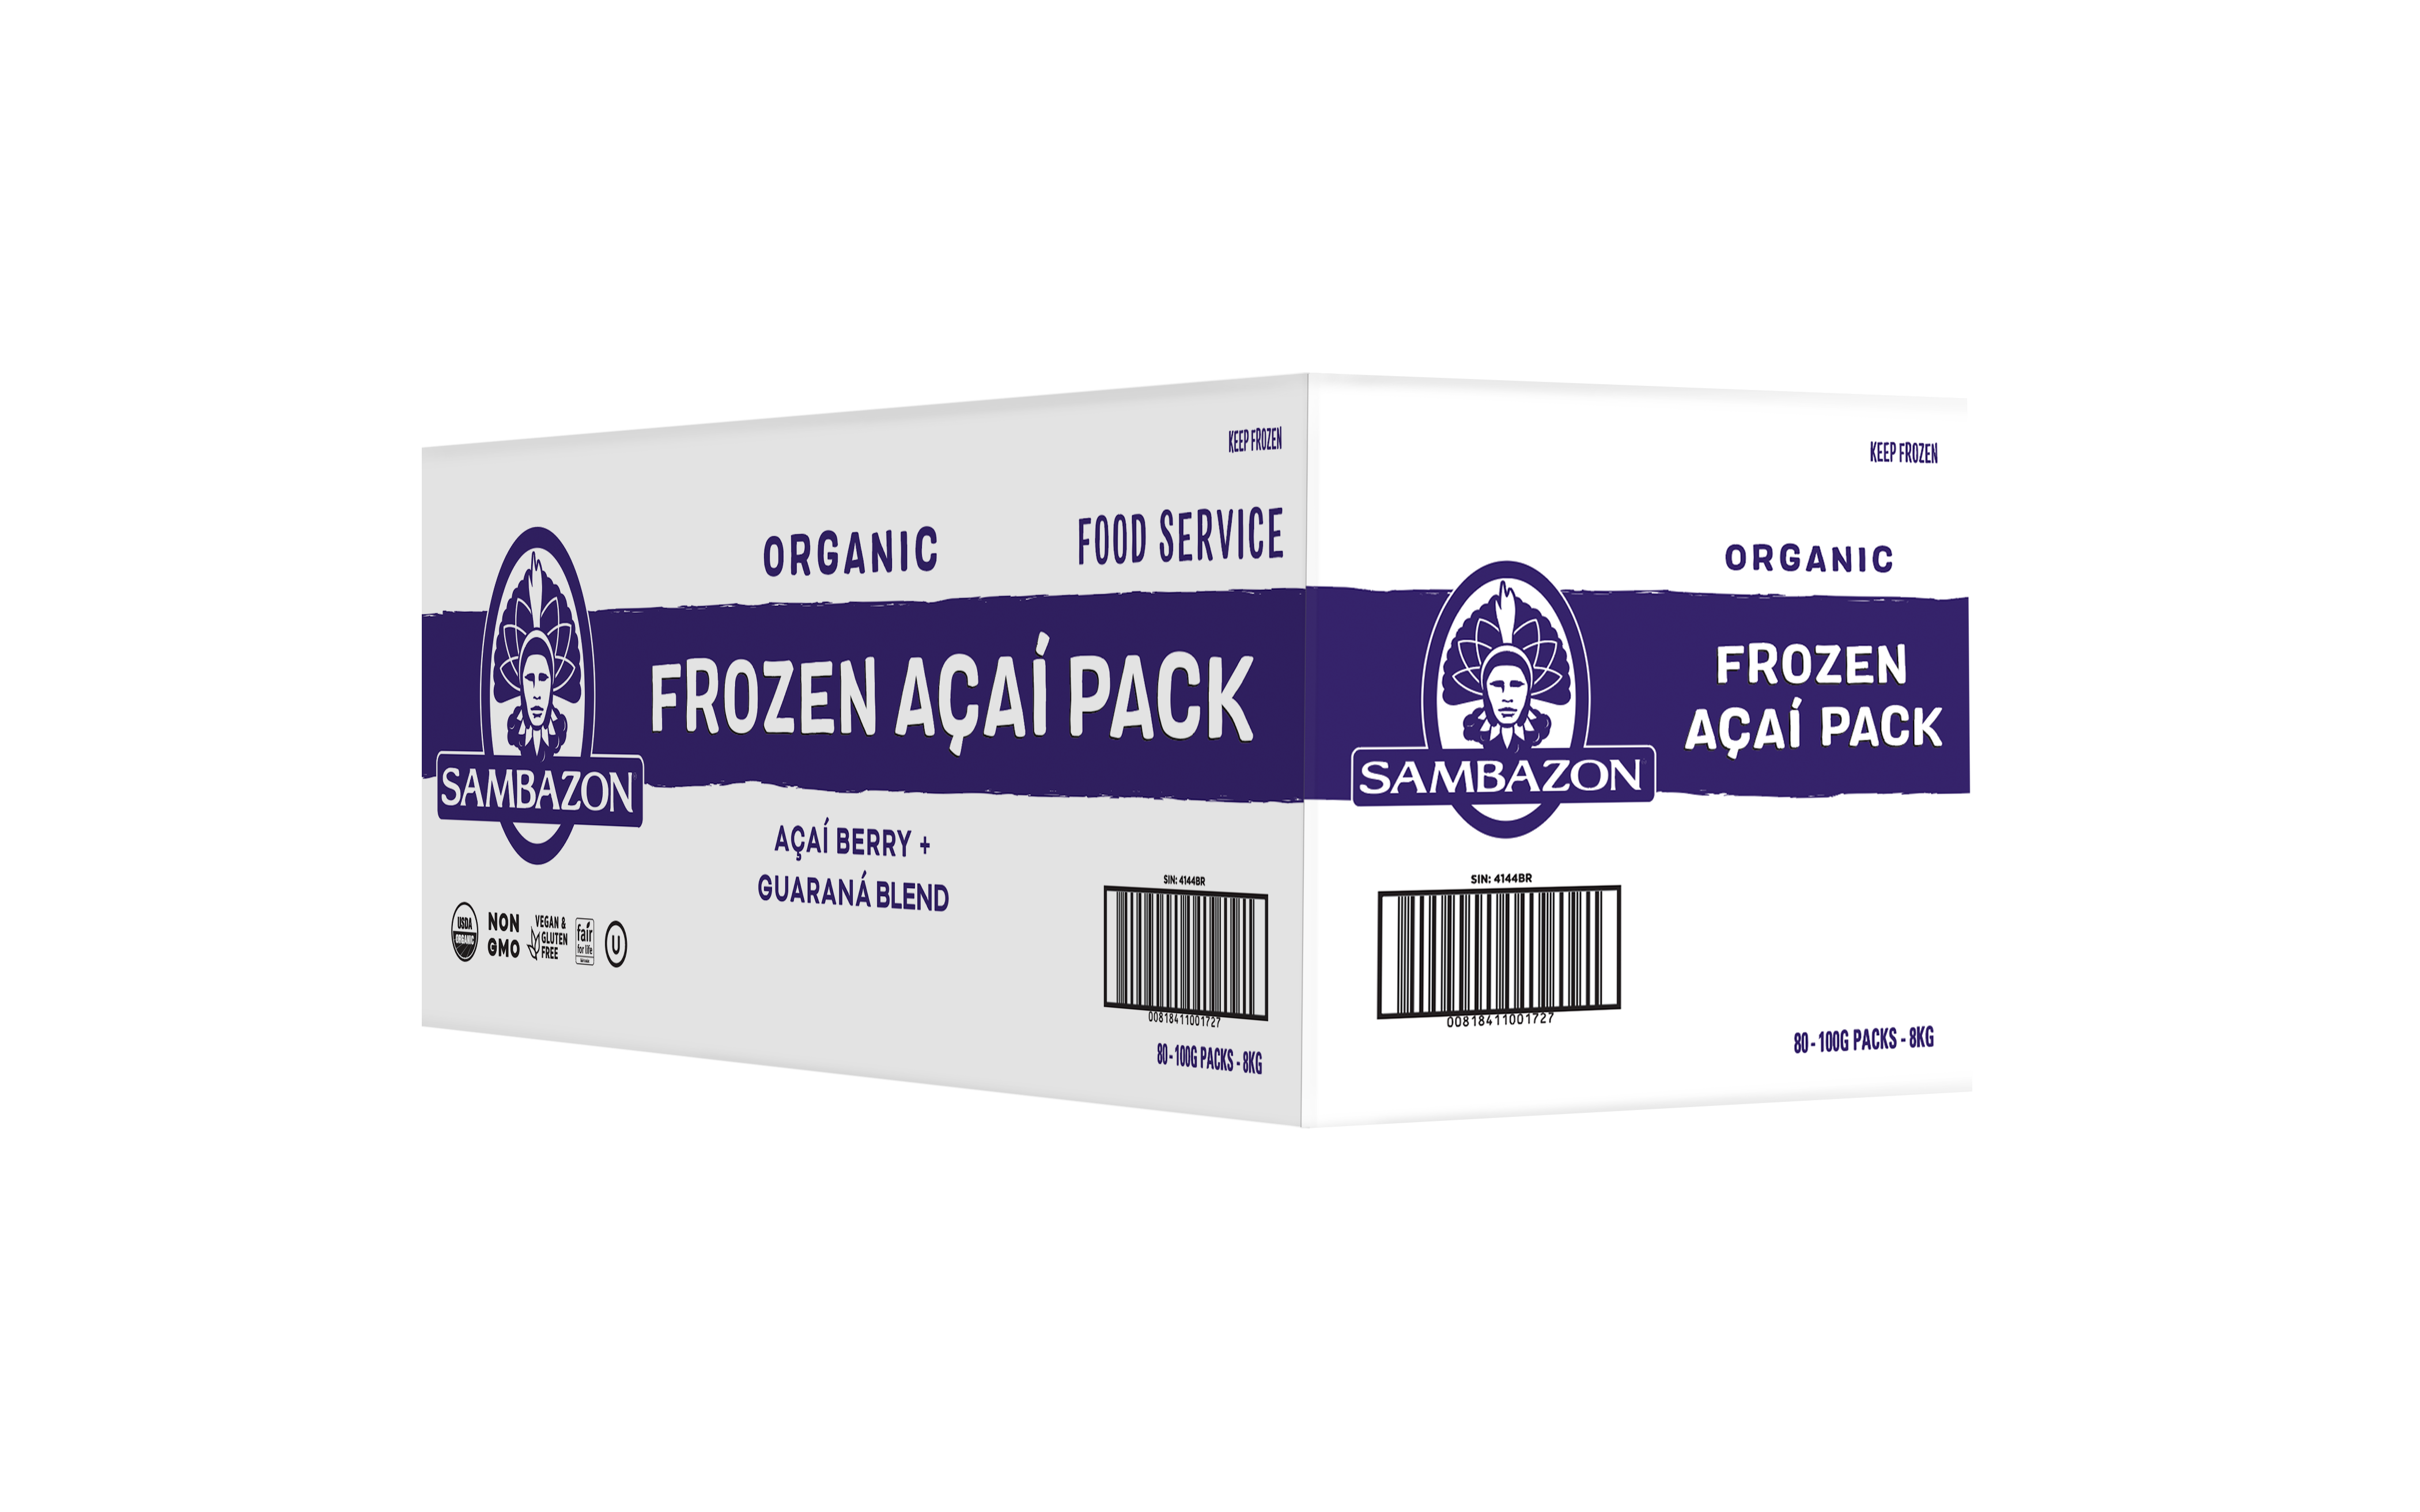 Sambazon Original Acai Packs (Food Service) 80 units per case 3.6 oz